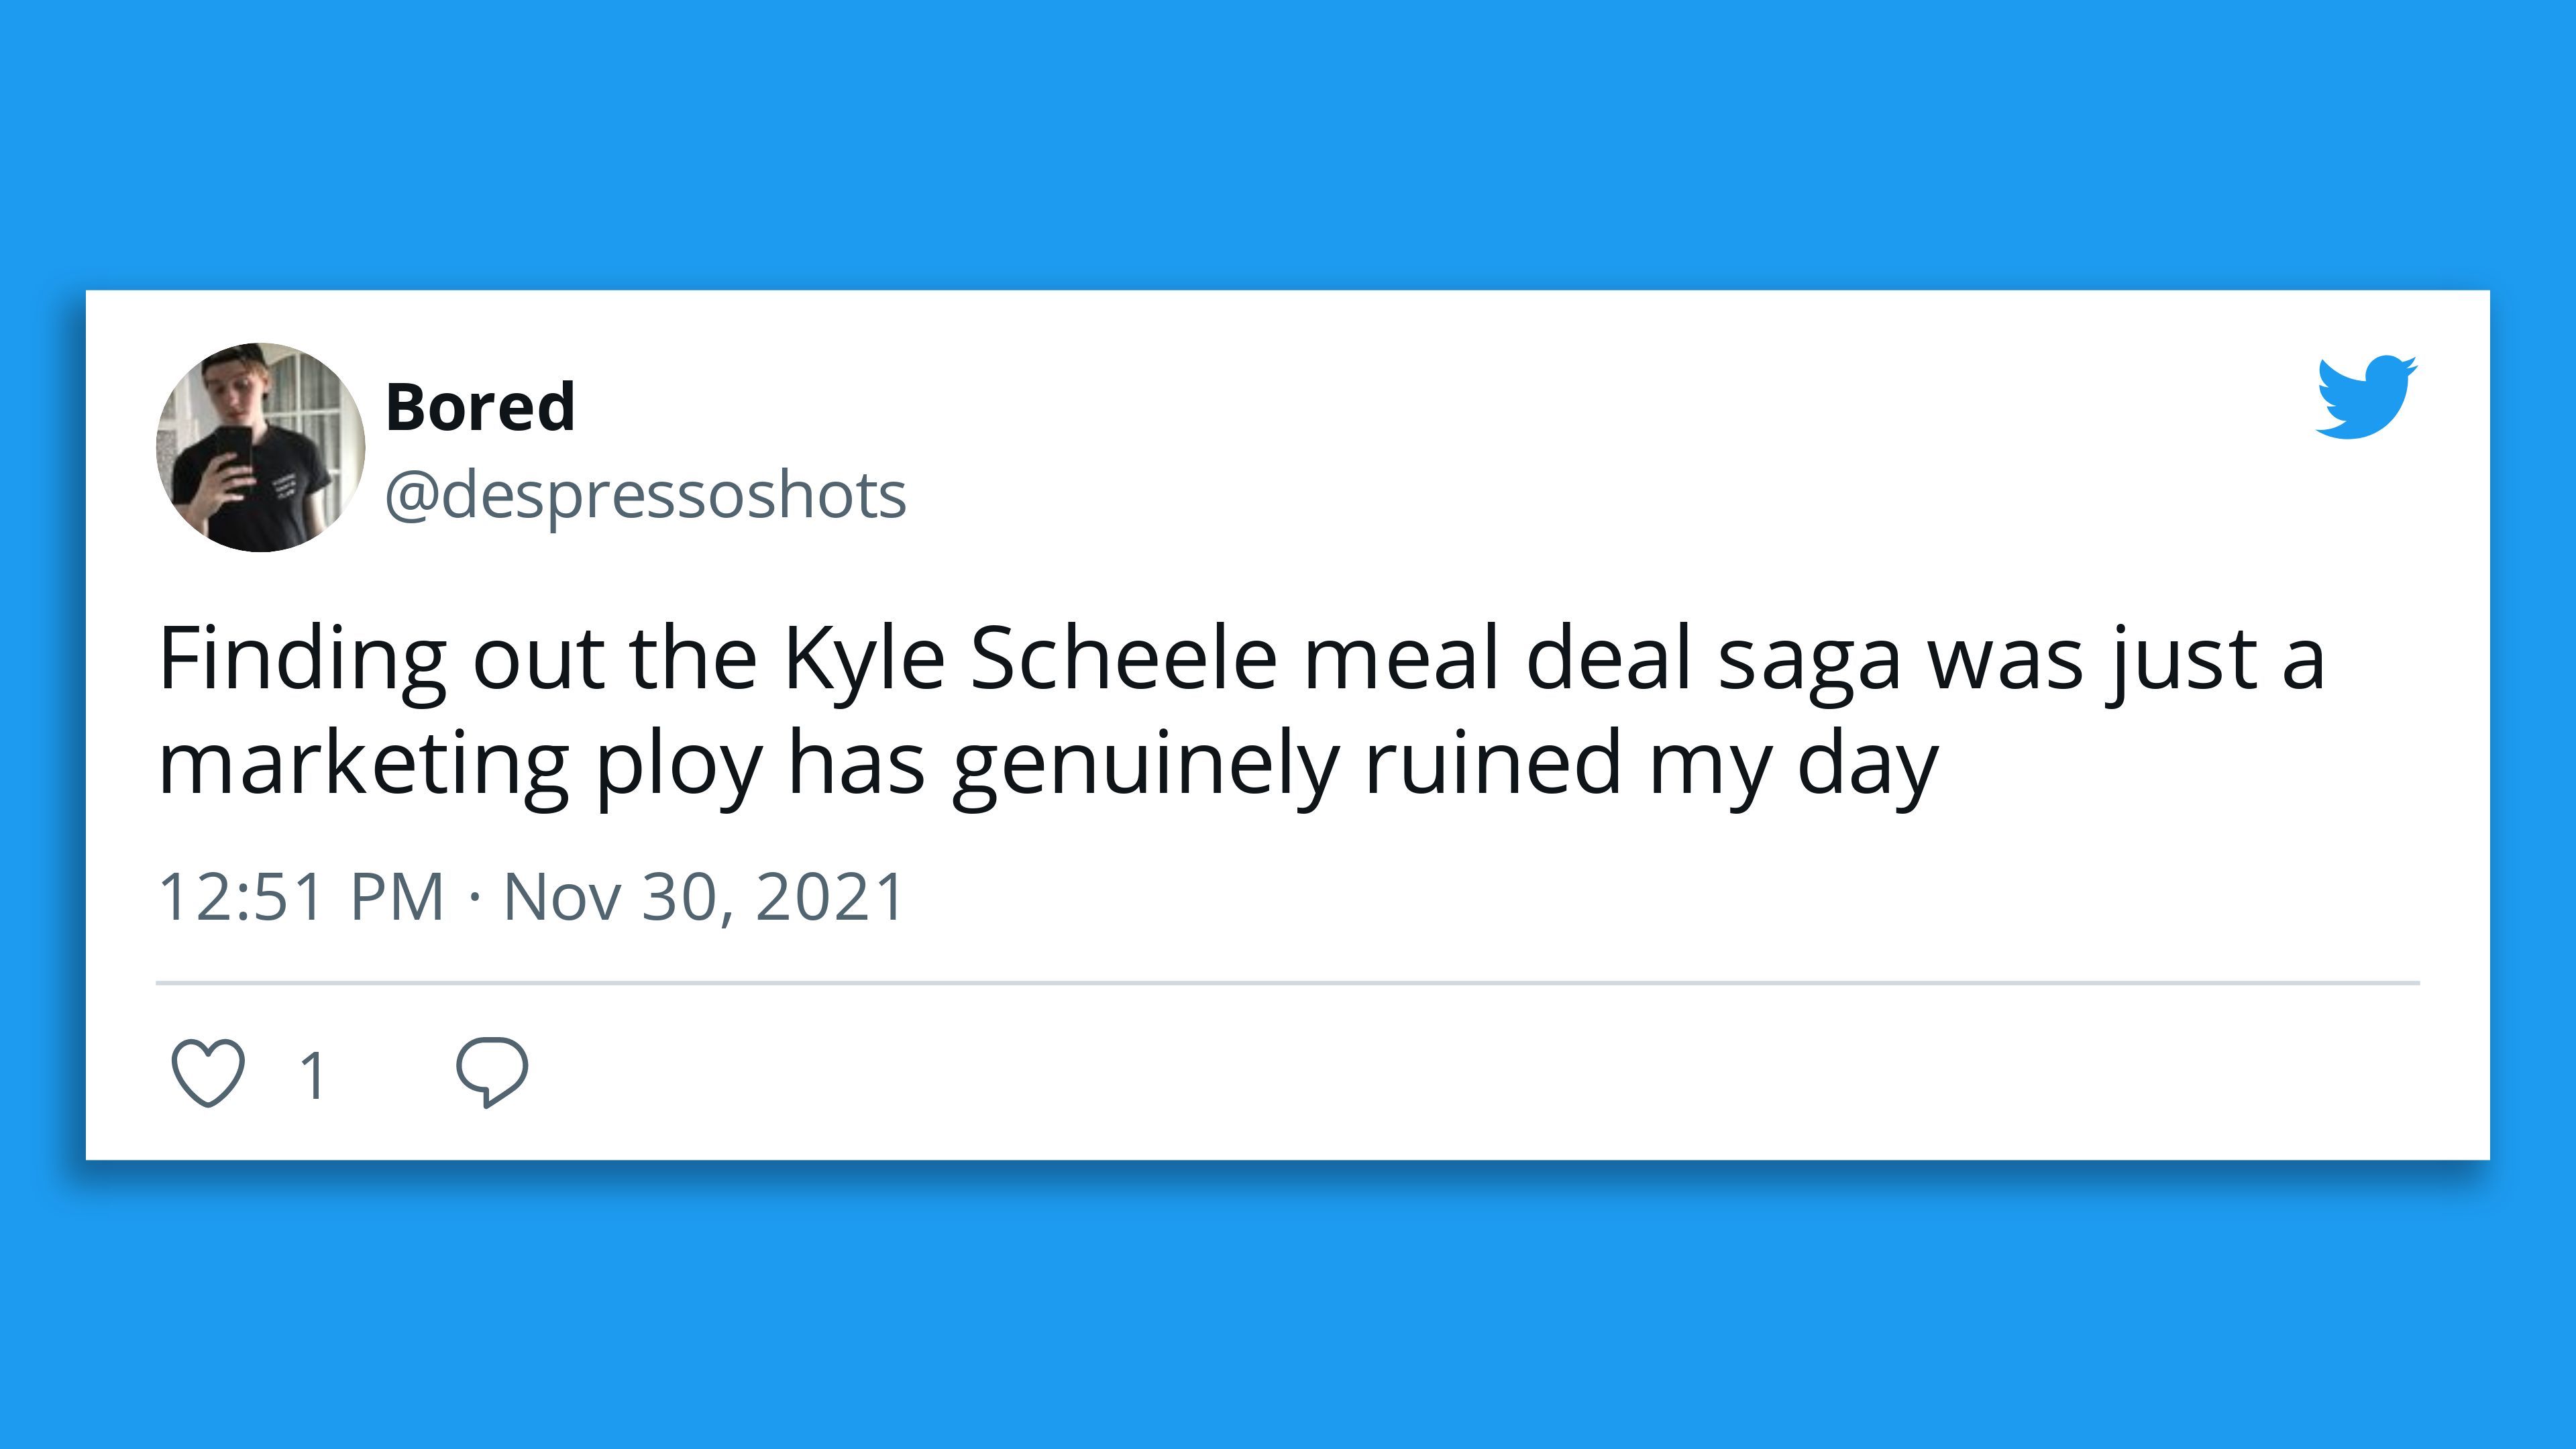 A tweet sad about the Kyle Scheele marketing ploy